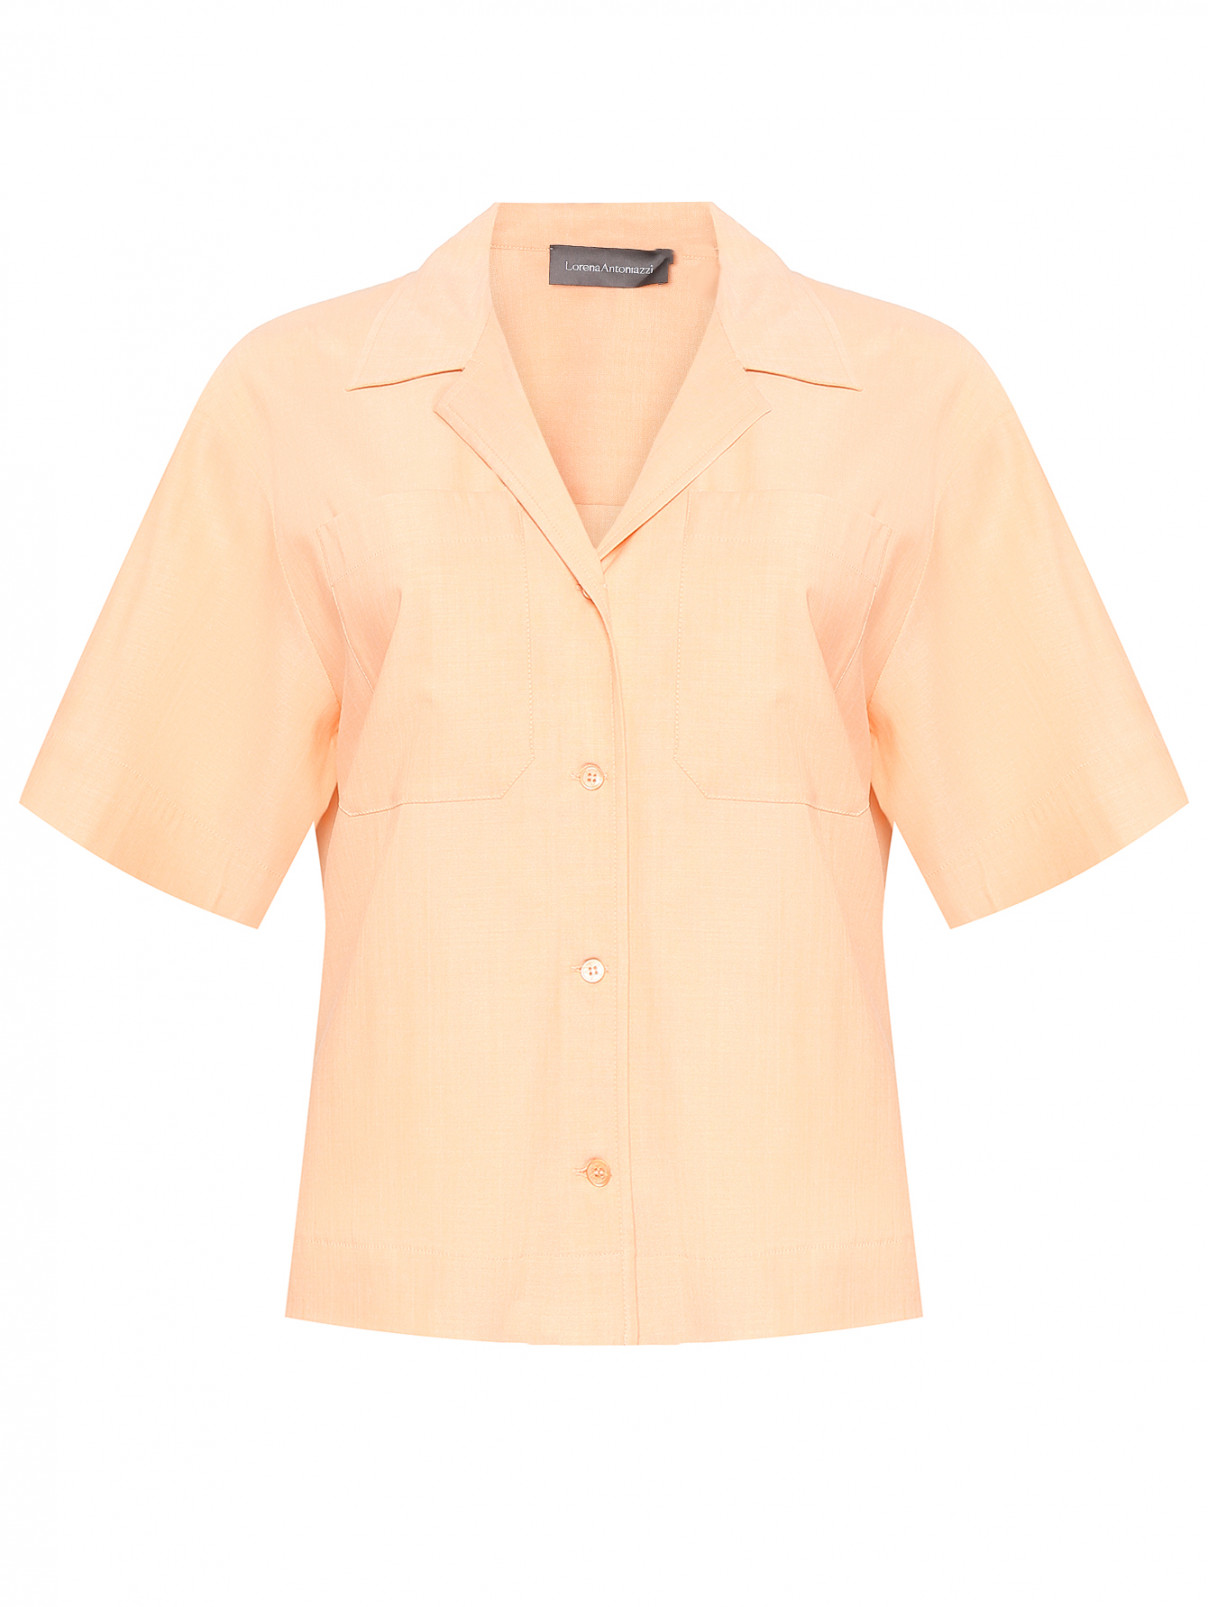 Рубашка с короткими рукавами Lorena Antoniazzi  –  Общий вид  – Цвет:  Розовый